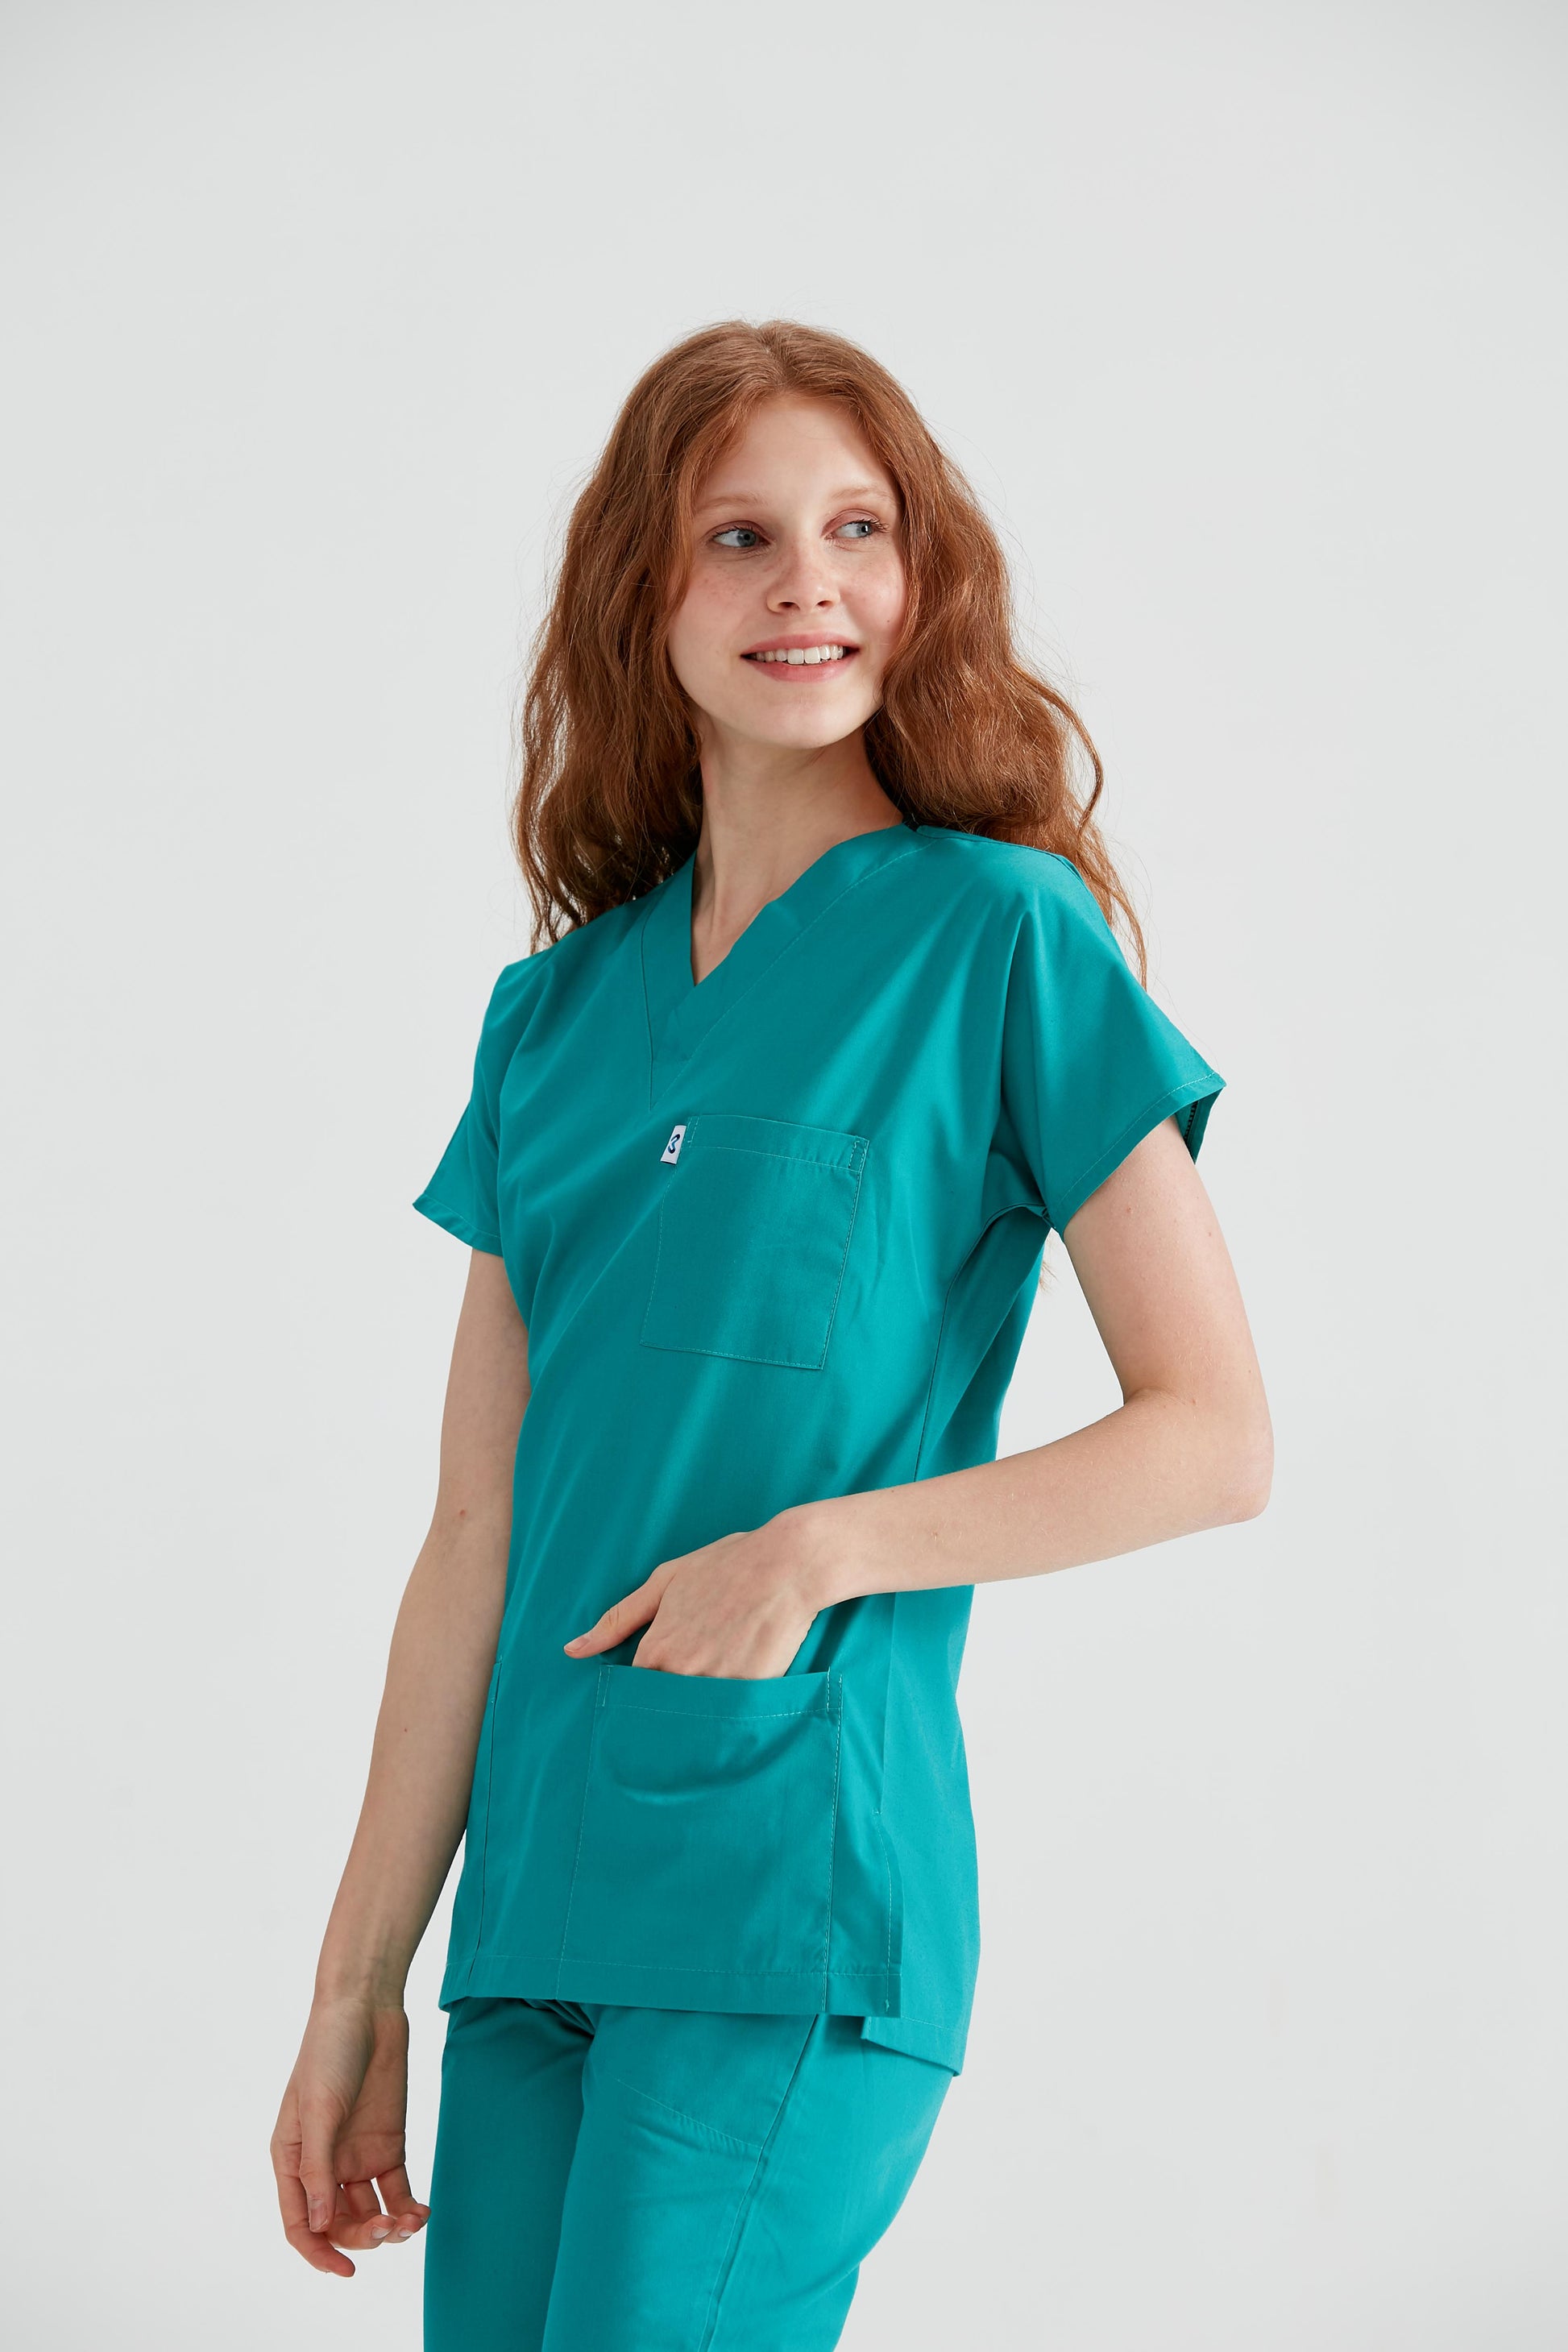 dama asistenta in costum medical de culoare verde chirurgical